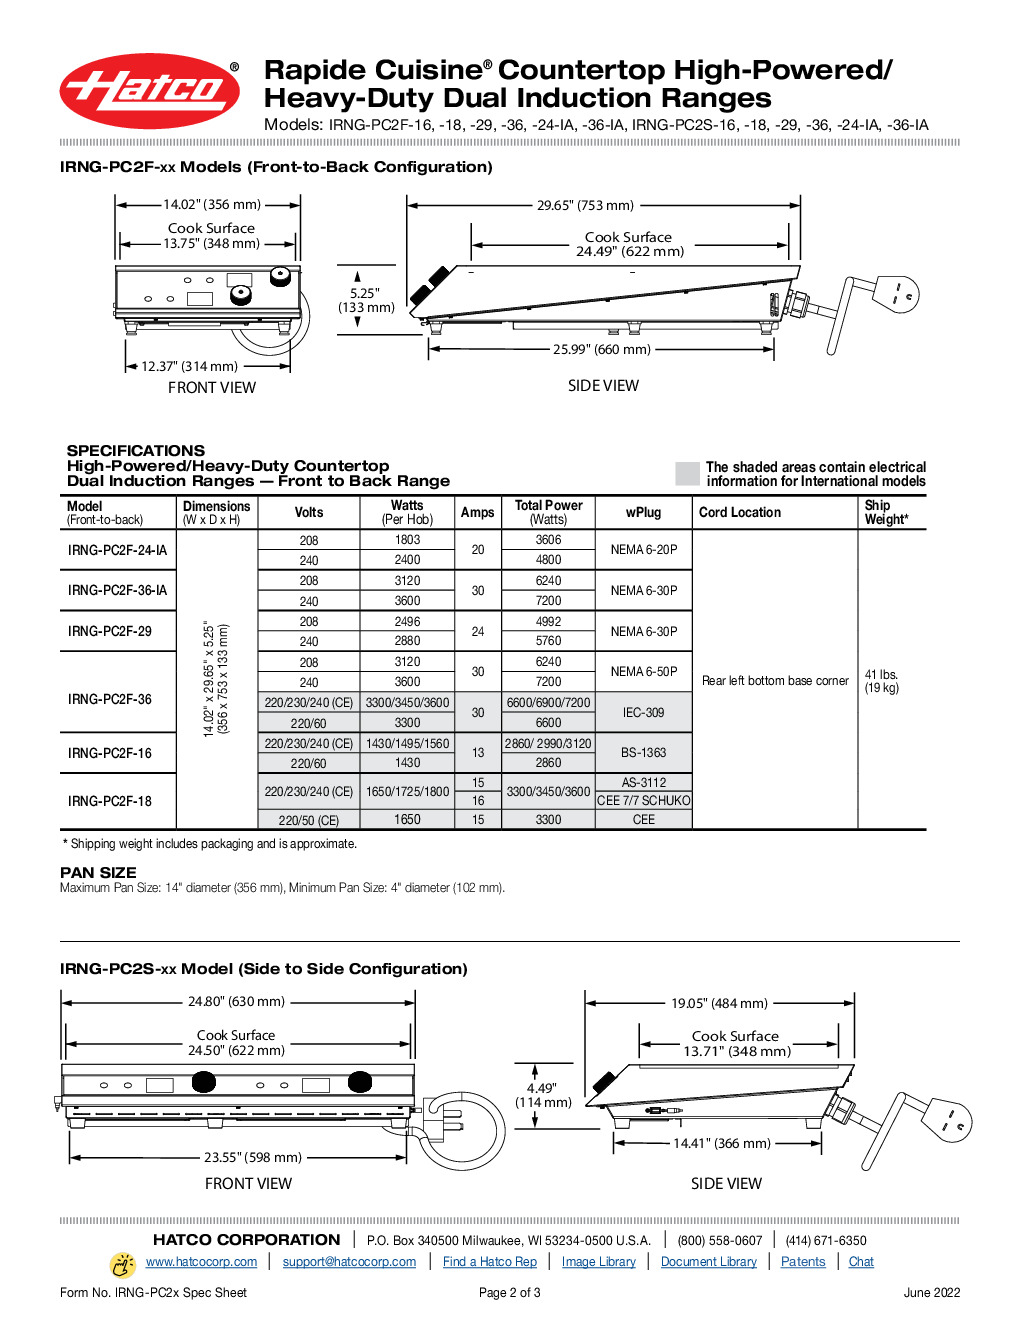 Hatco IRNG-PC2S-18-QS Countertop Induction Range